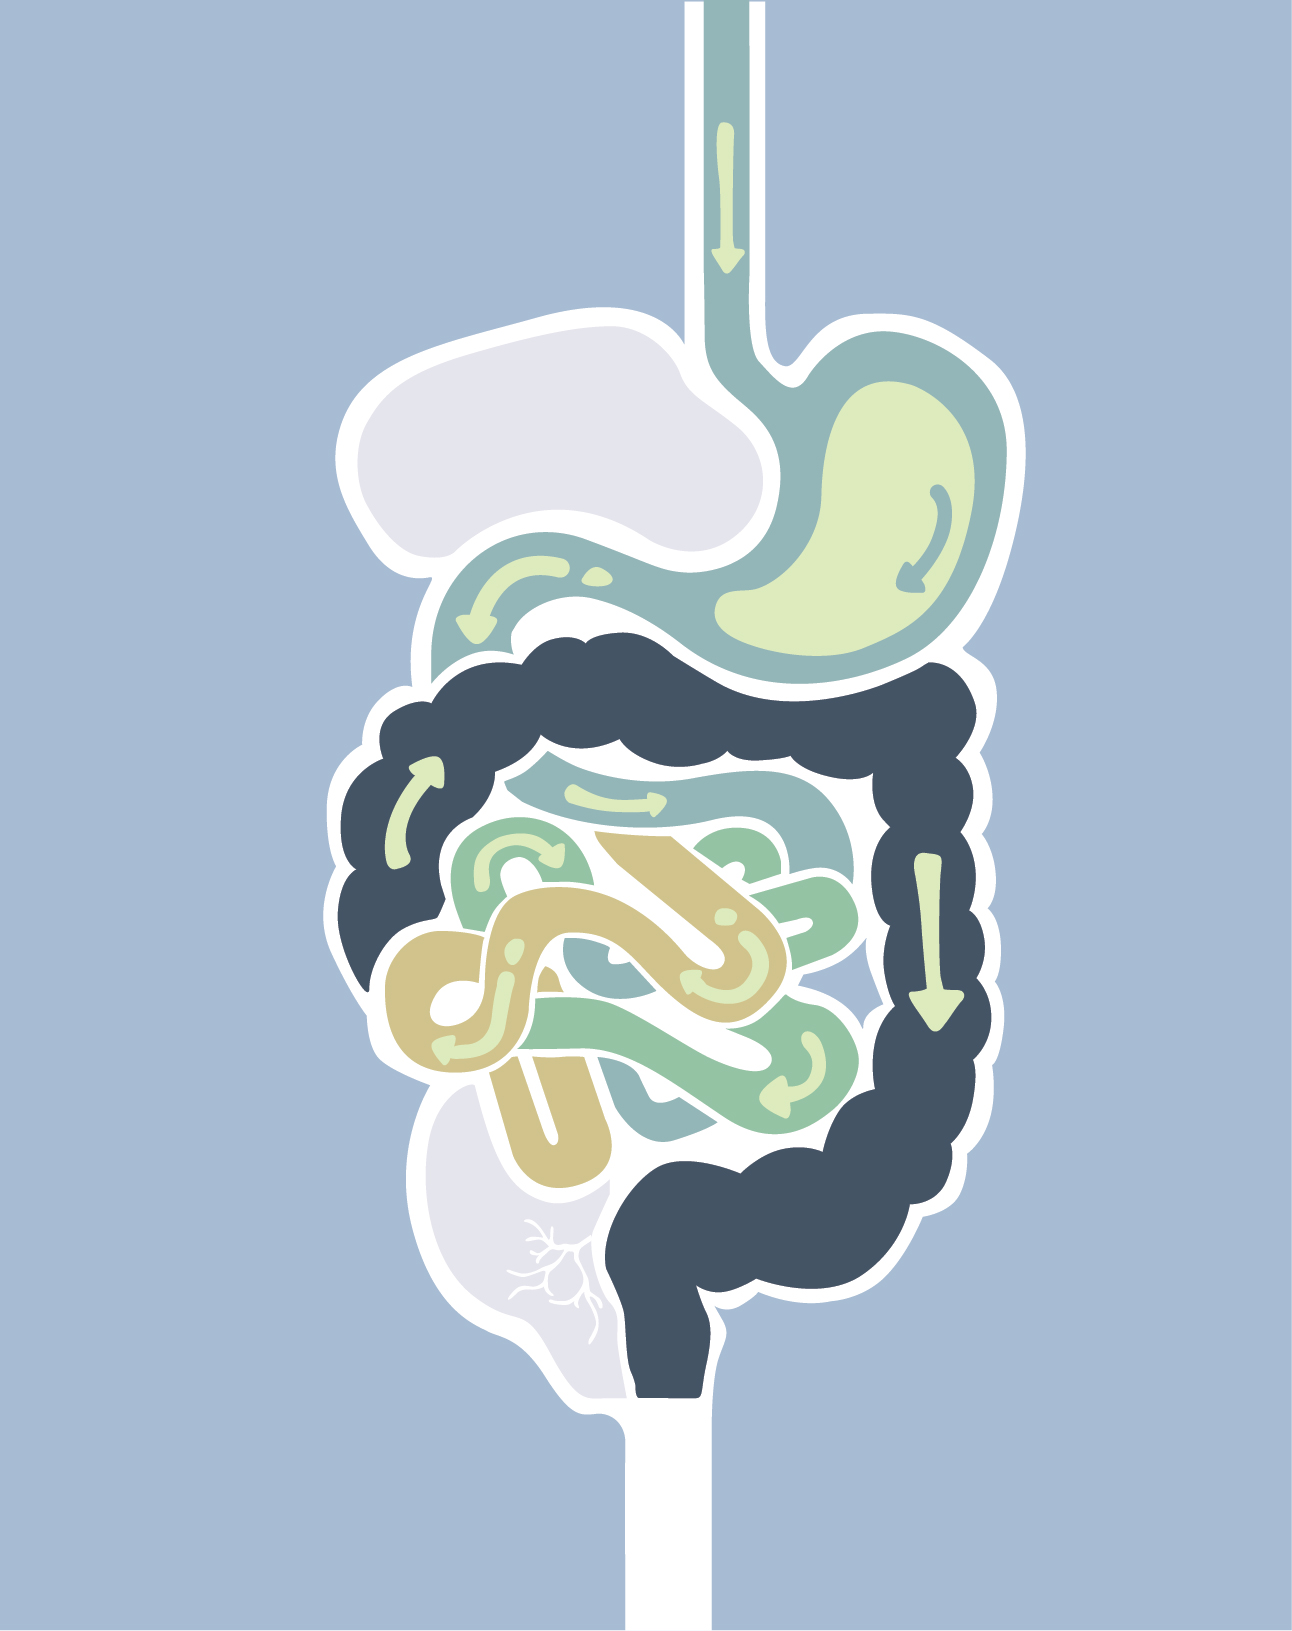 Bacteria surviving the gut